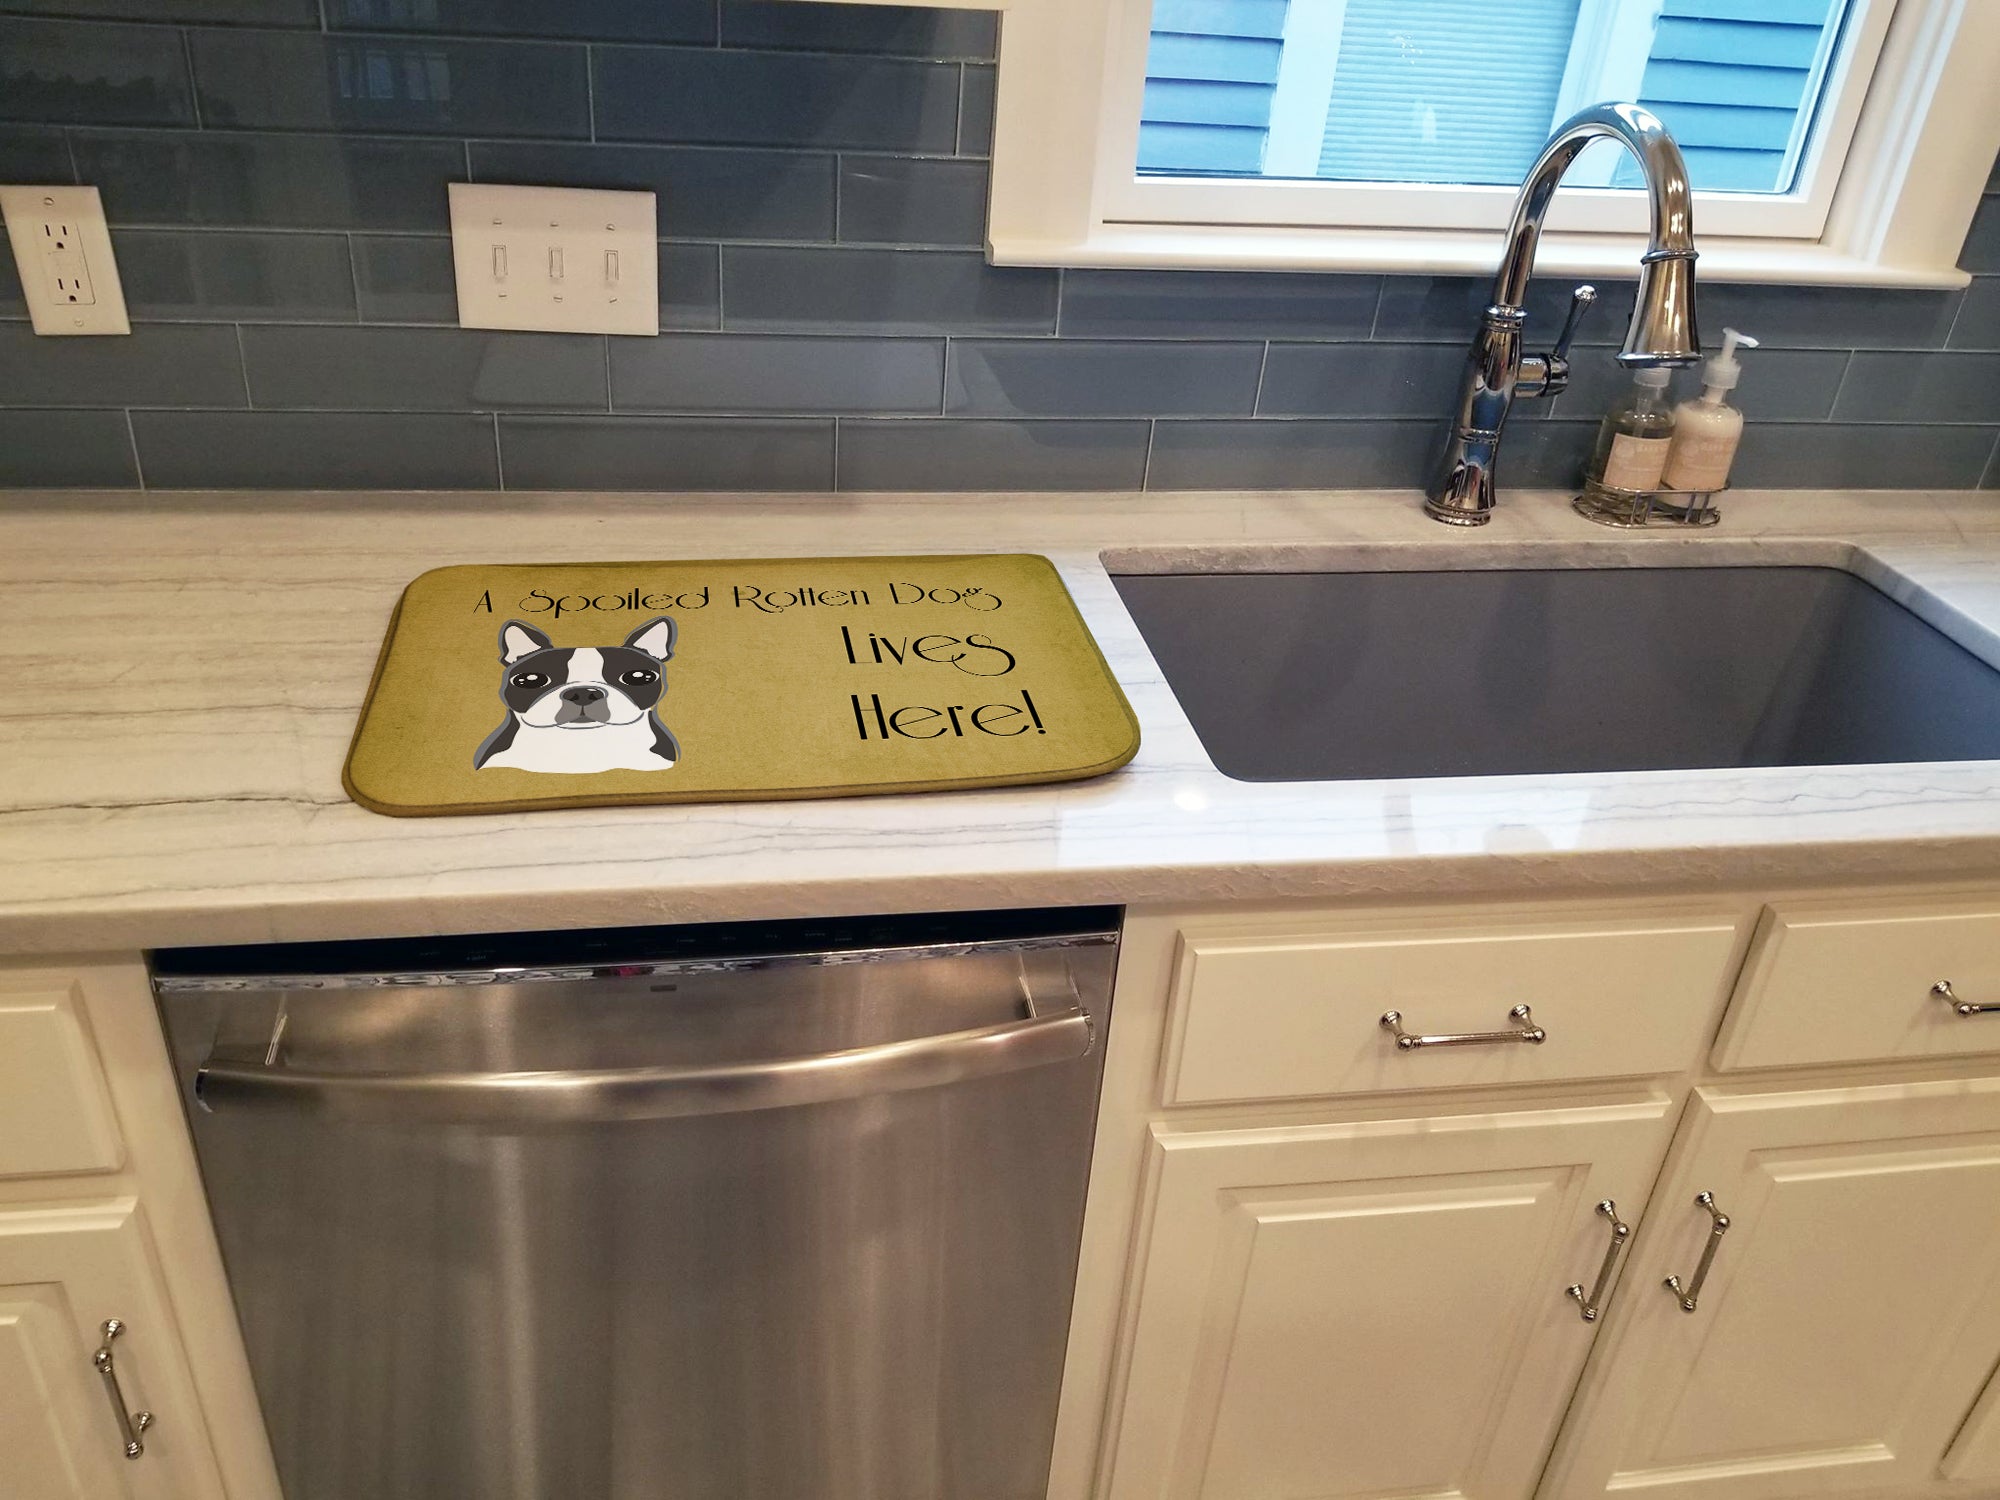 Boston Terrier Spoiled Dog Lives Here Dish Drying Mat BB1451DDM